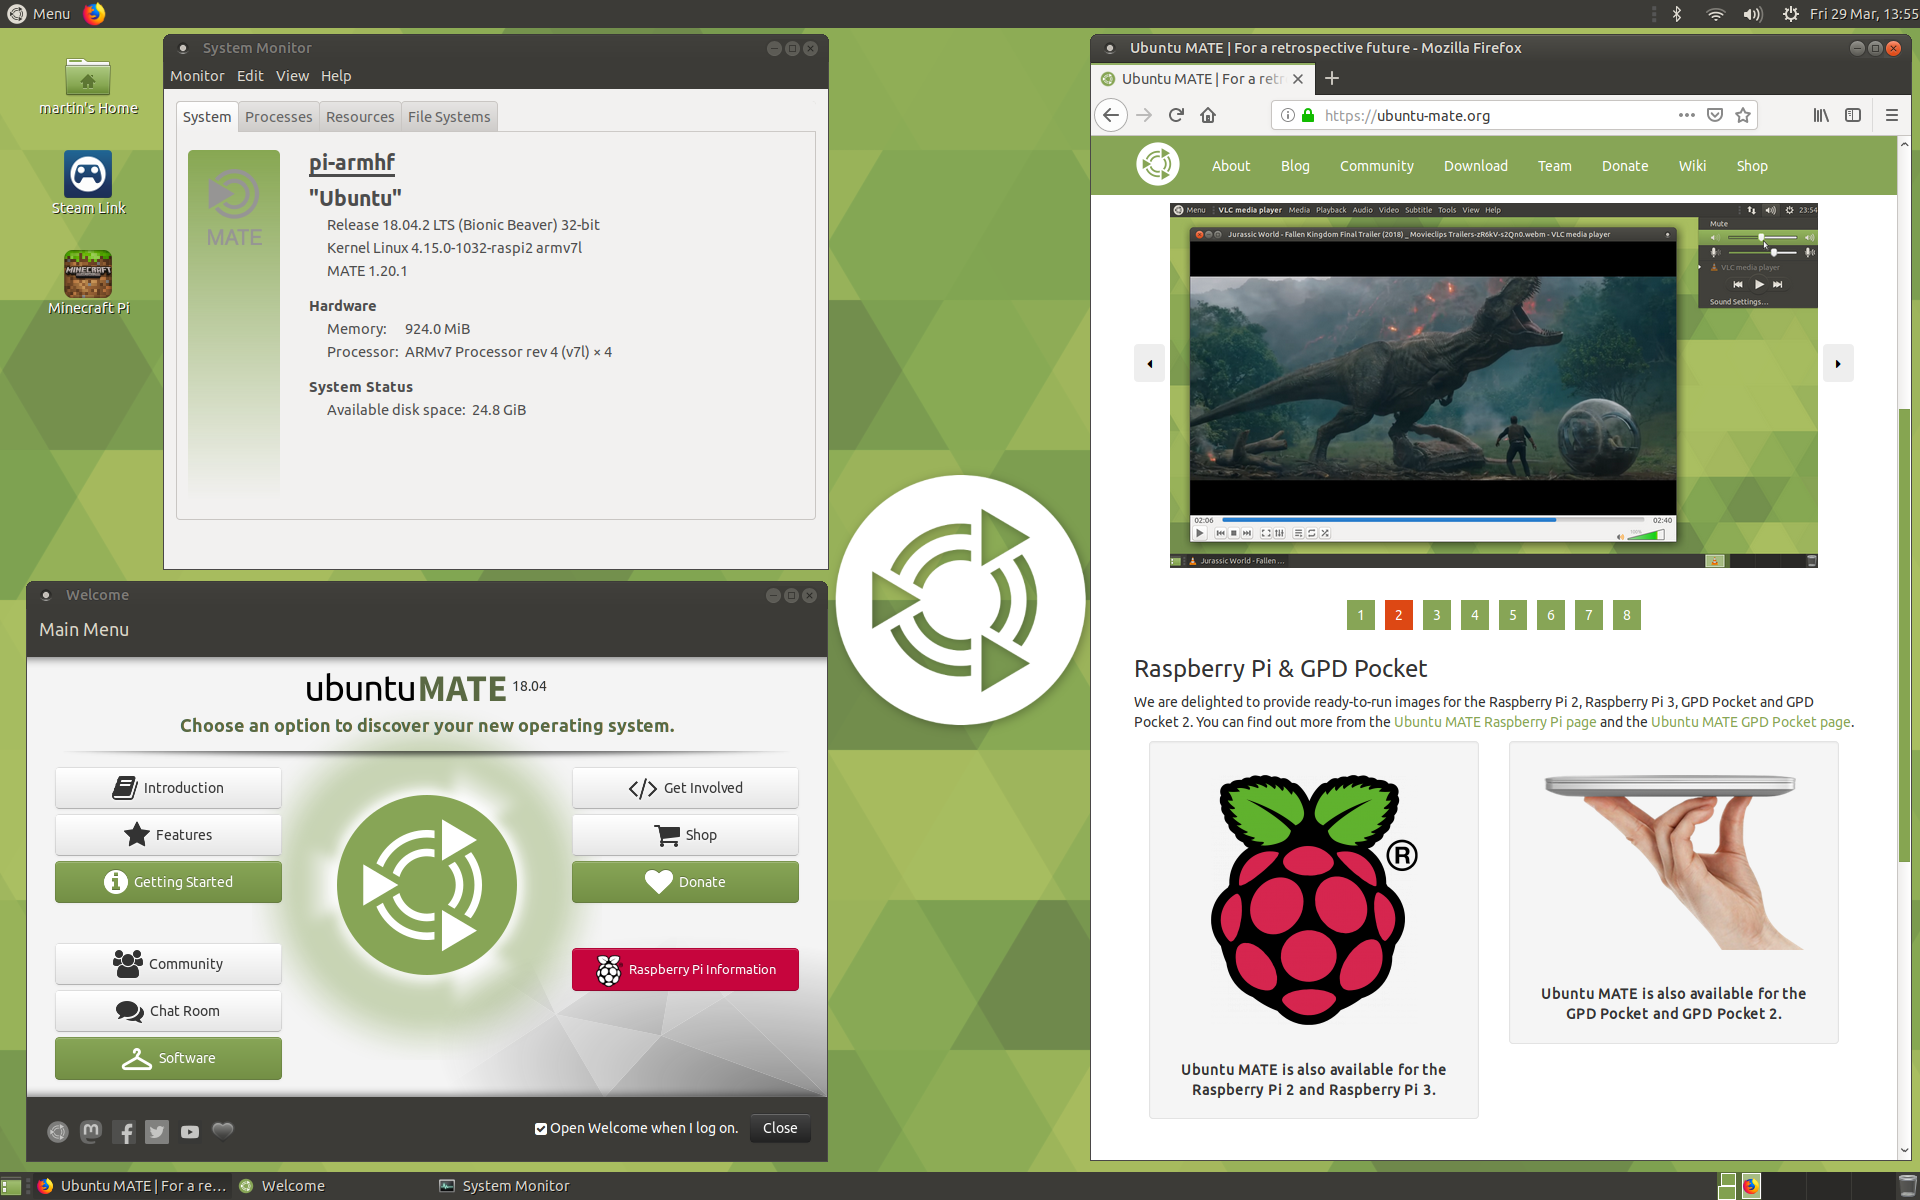 Ubuntu MATE 16.04.2 running on the Raspberry Pi 3